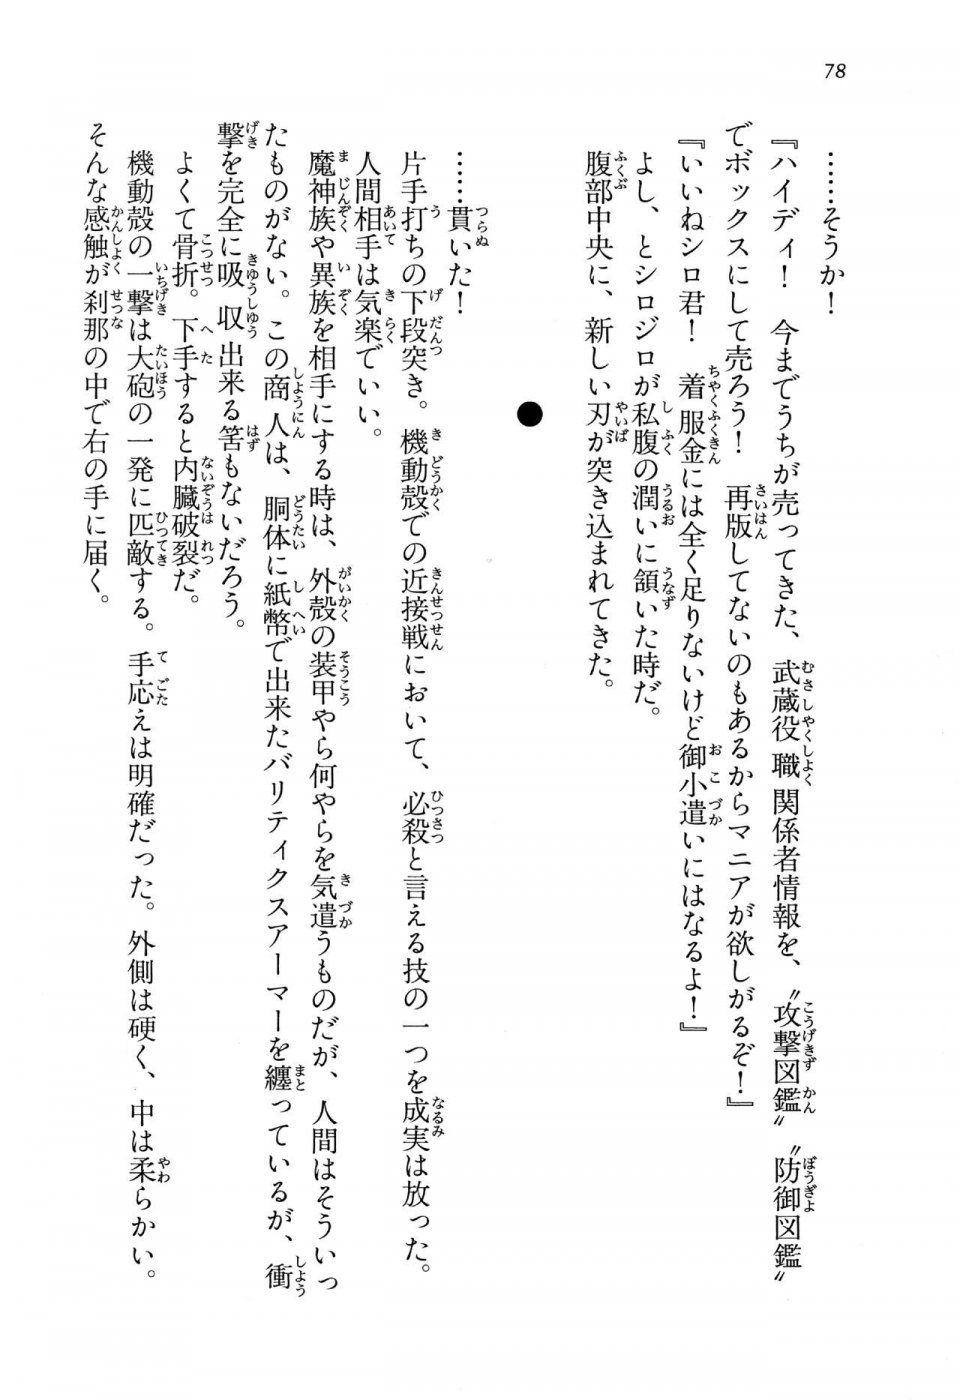 Kyoukai Senjou no Horizon LN Vol 15(6C) Part 1 - Photo #78